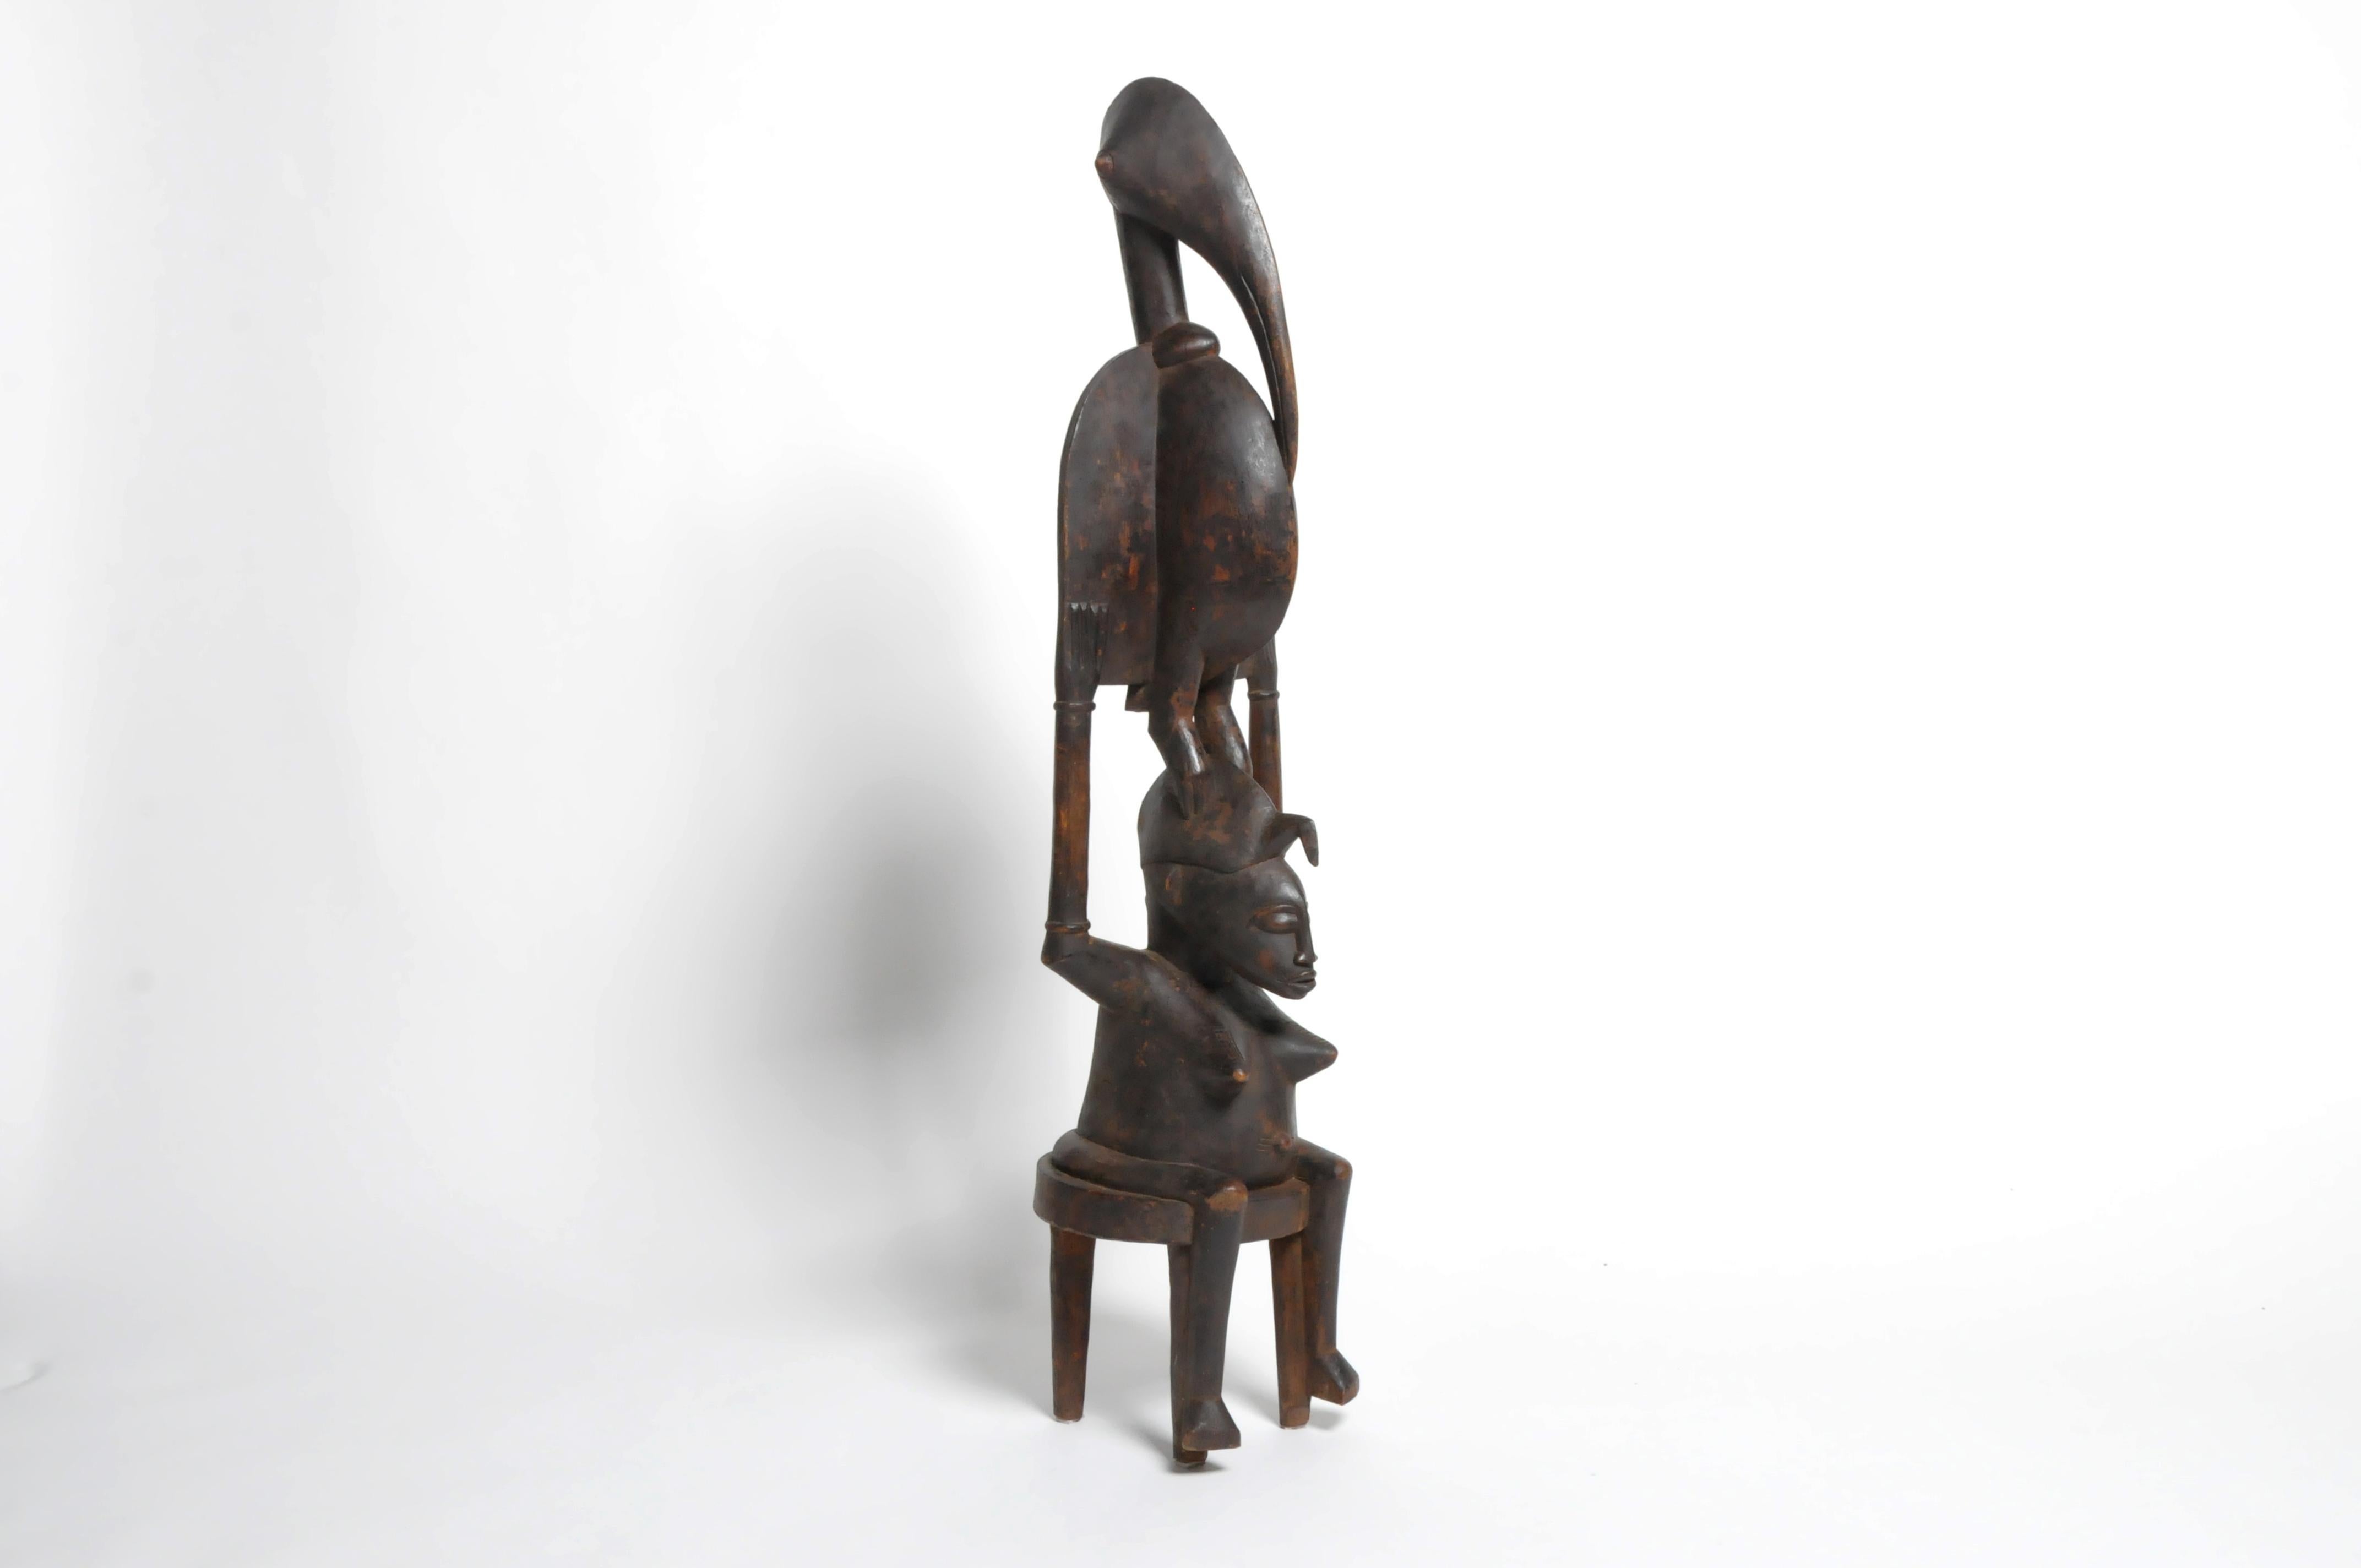 Small Yoruba Style Figure of a Woman Sculpture 3